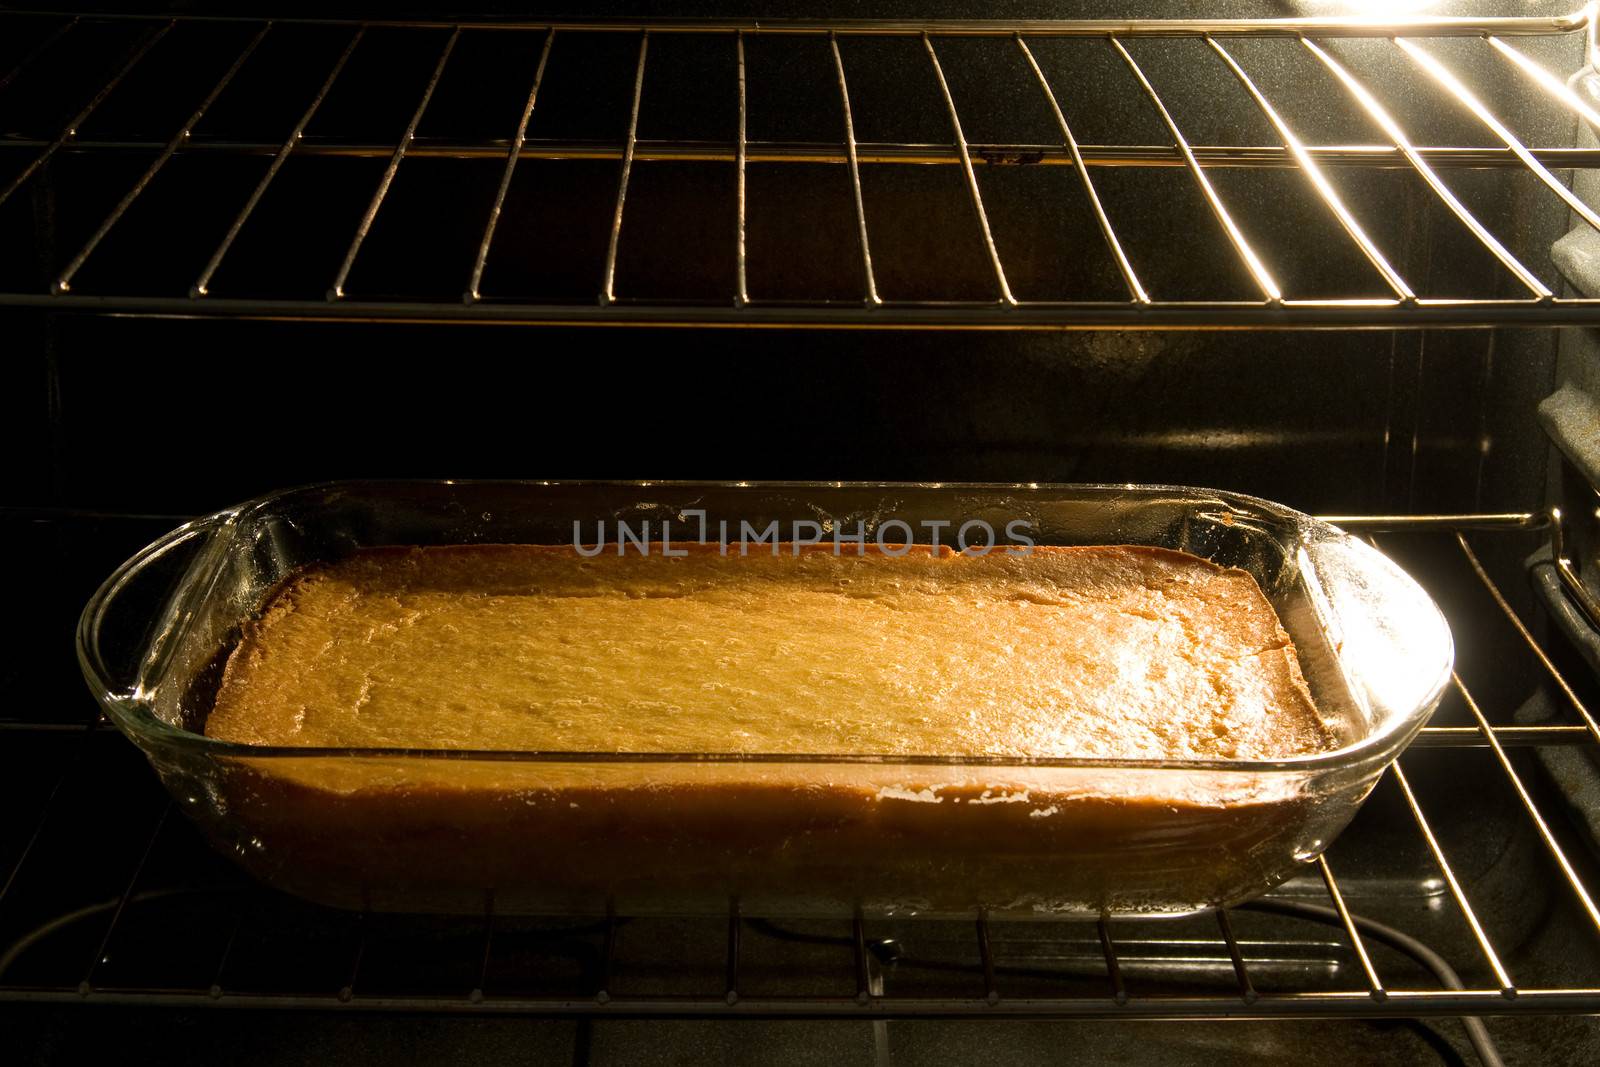 Closeup of corn cake baking in oven.